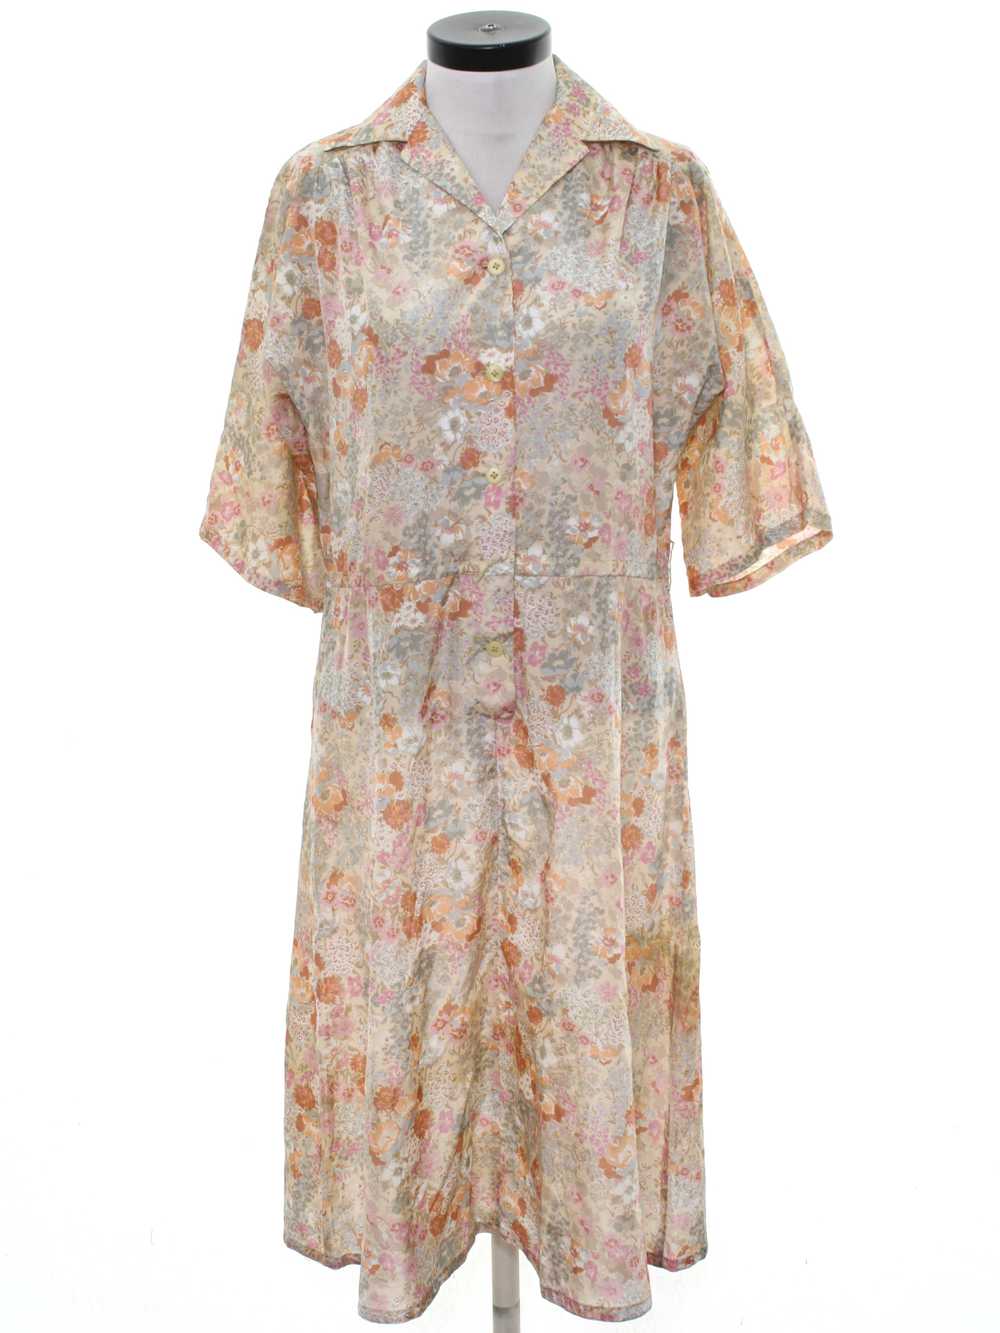 1960's Day Dress - image 1